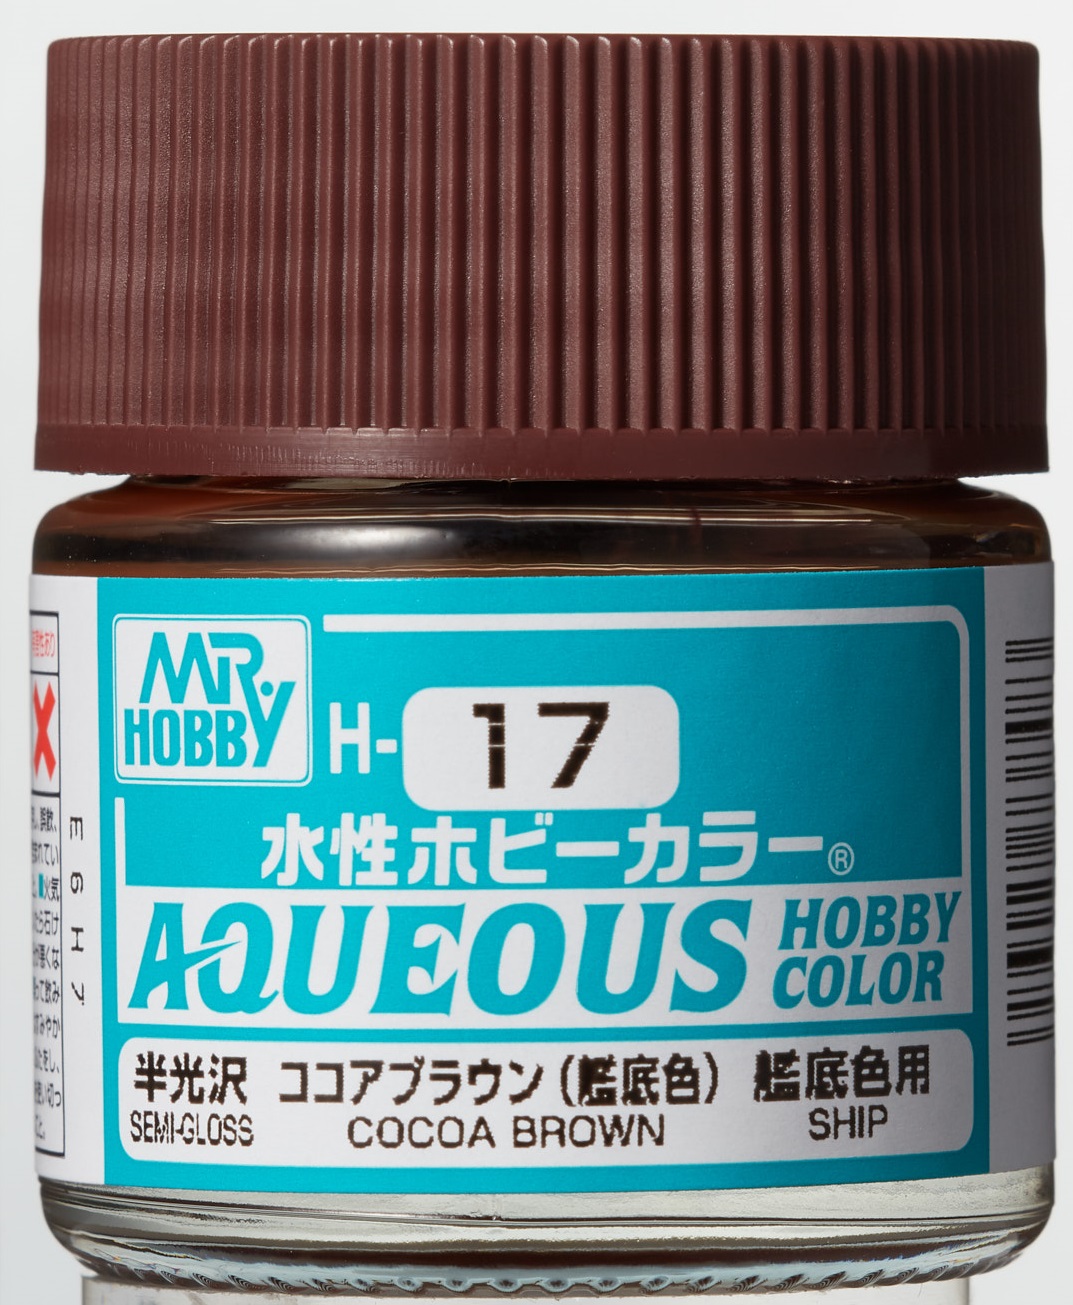 Mr. Aqueous Hobby Color - Cocoa Brown - H17 - Kakaobraun